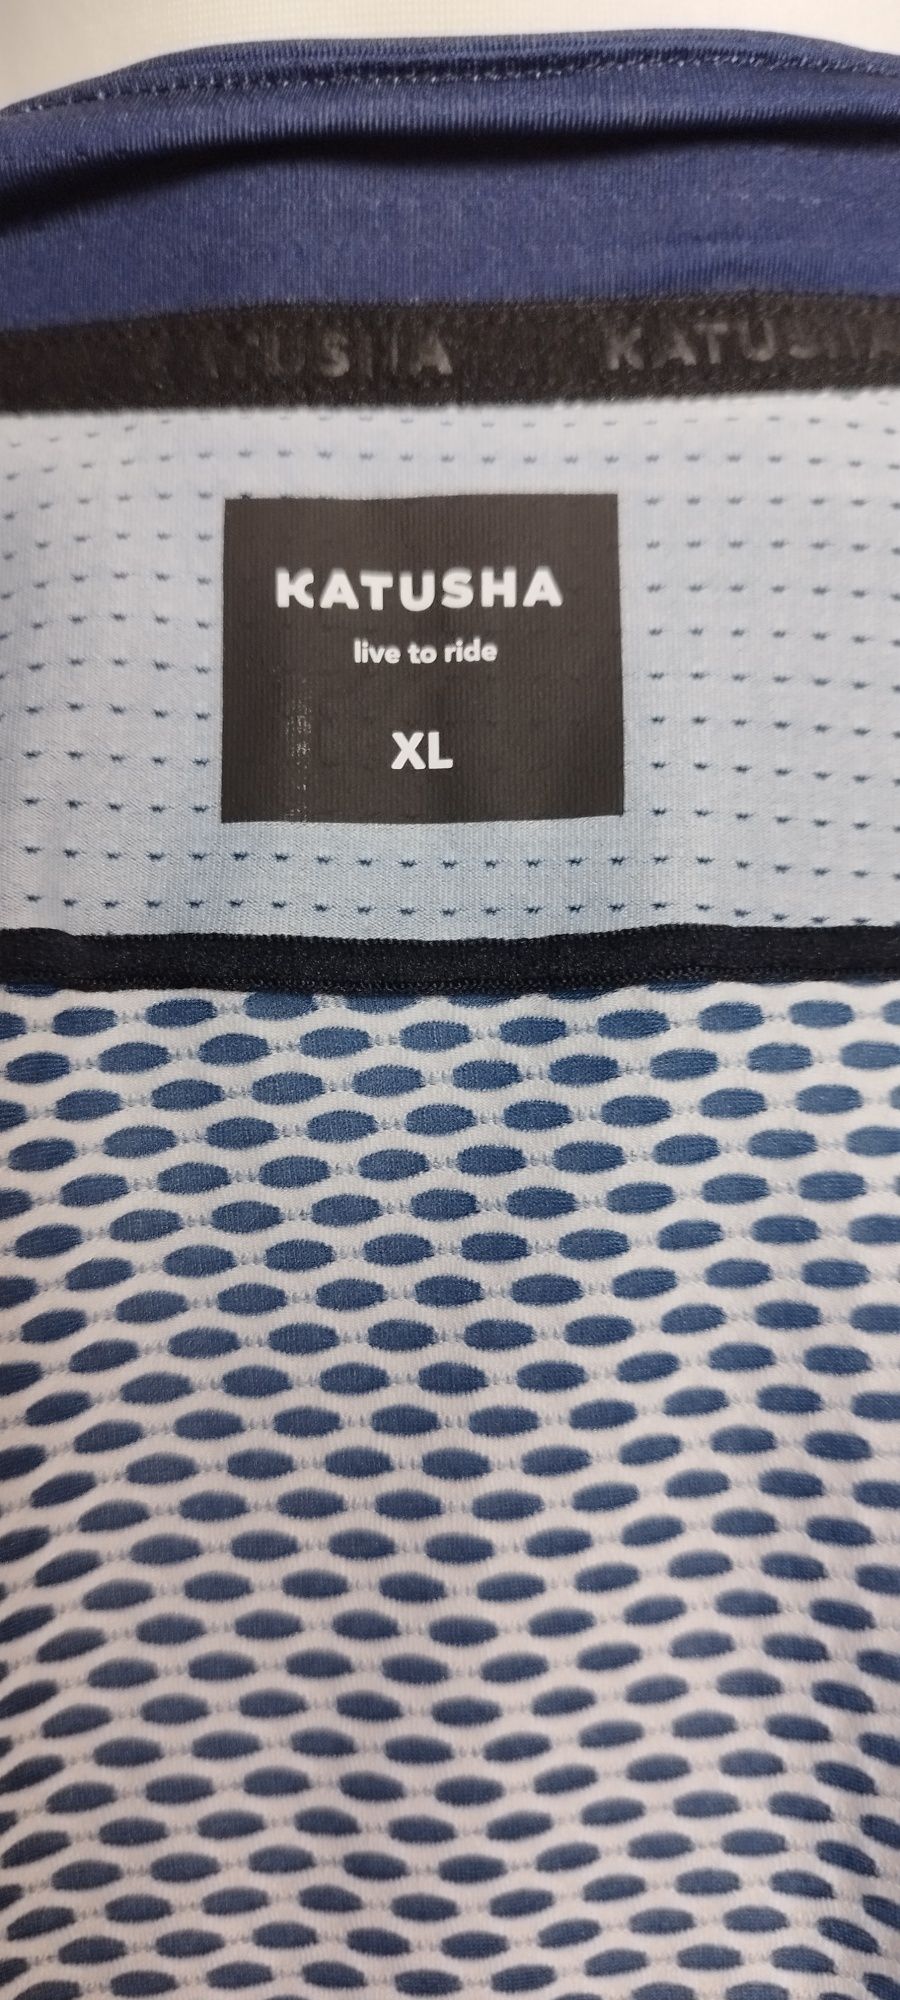 Nowa.keska koszulka kolarska / rowerowa Katusha XL